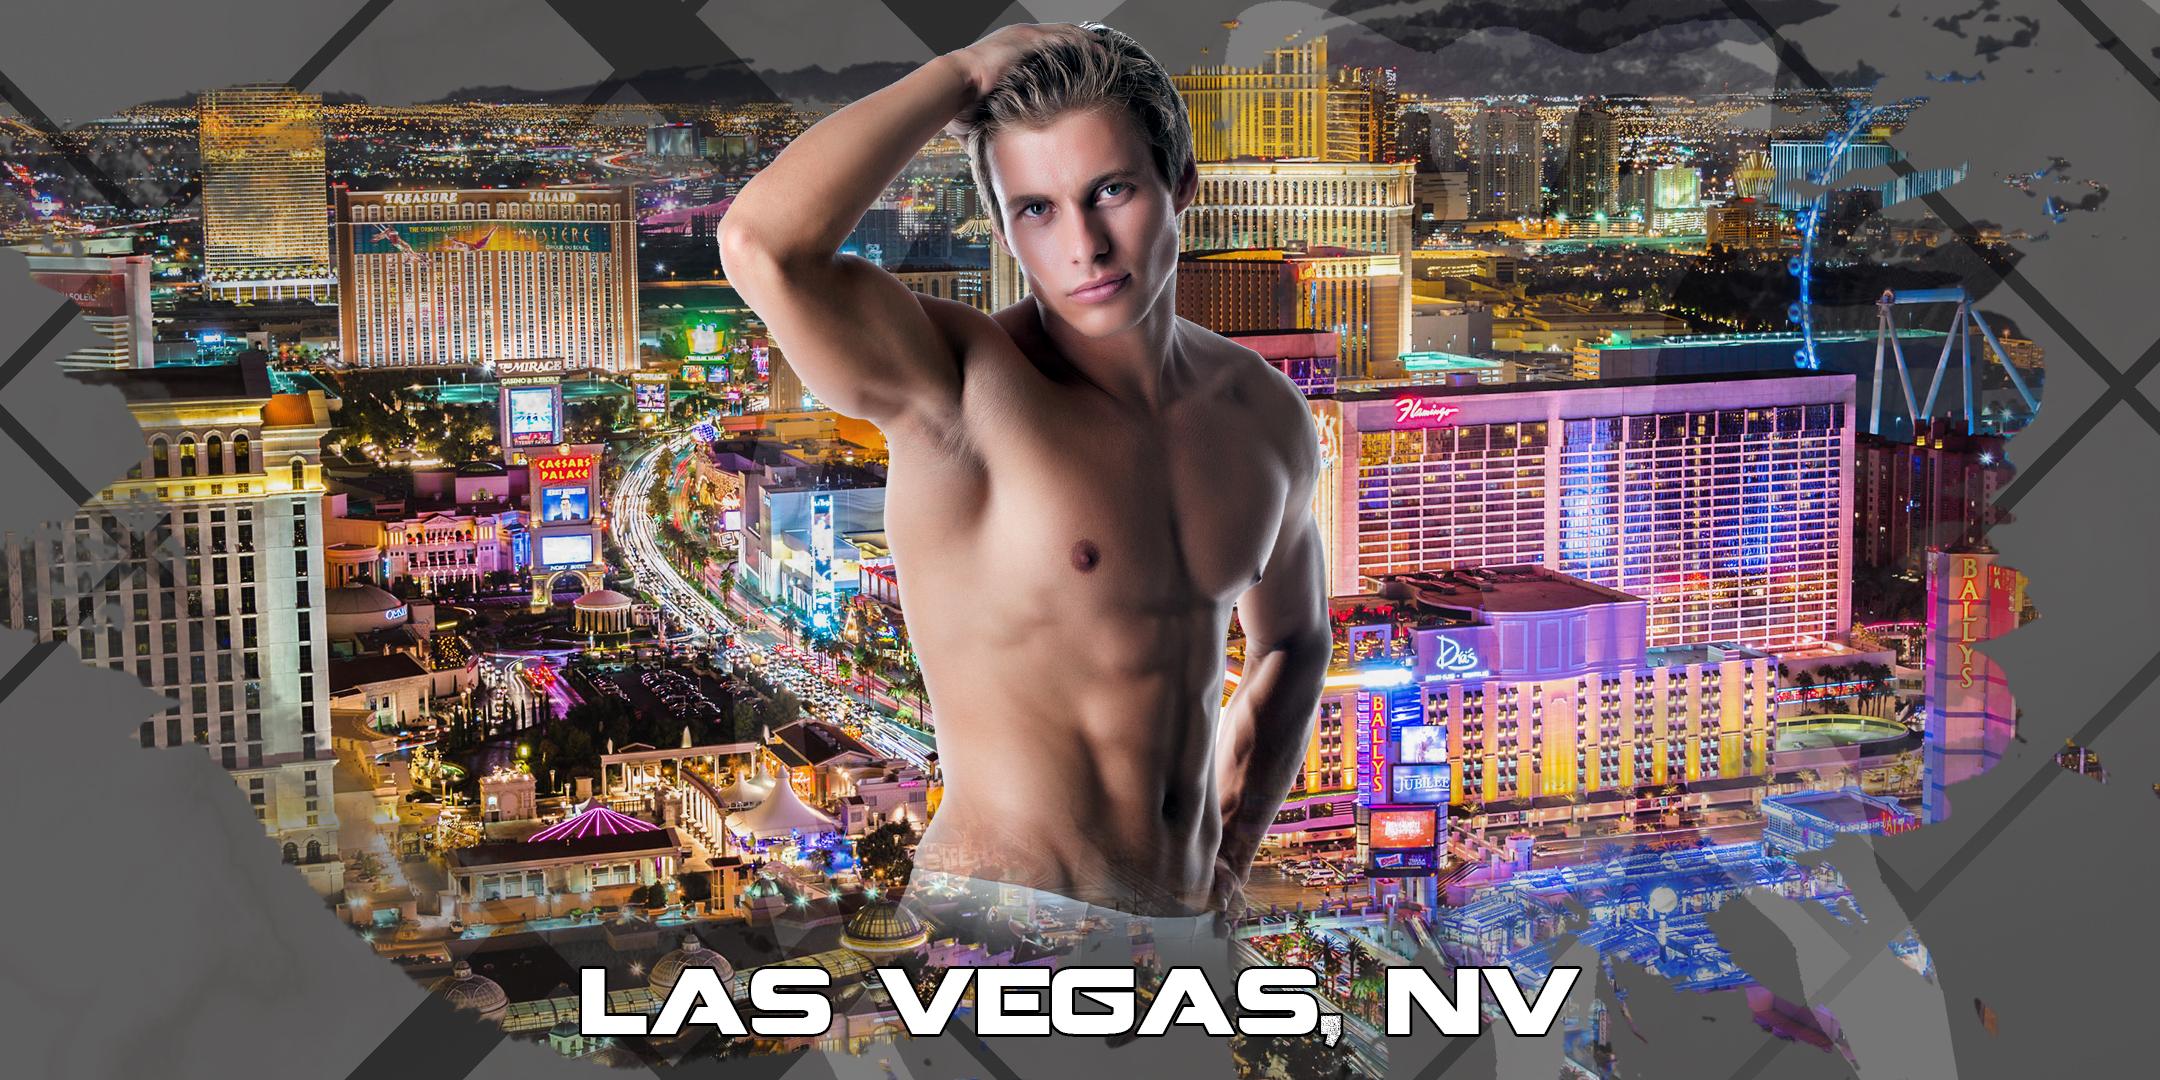 BuffBoyzz Gay Friendly Male Strip Clubs & Male Strippers Las Vegas, NV 8-10 PM